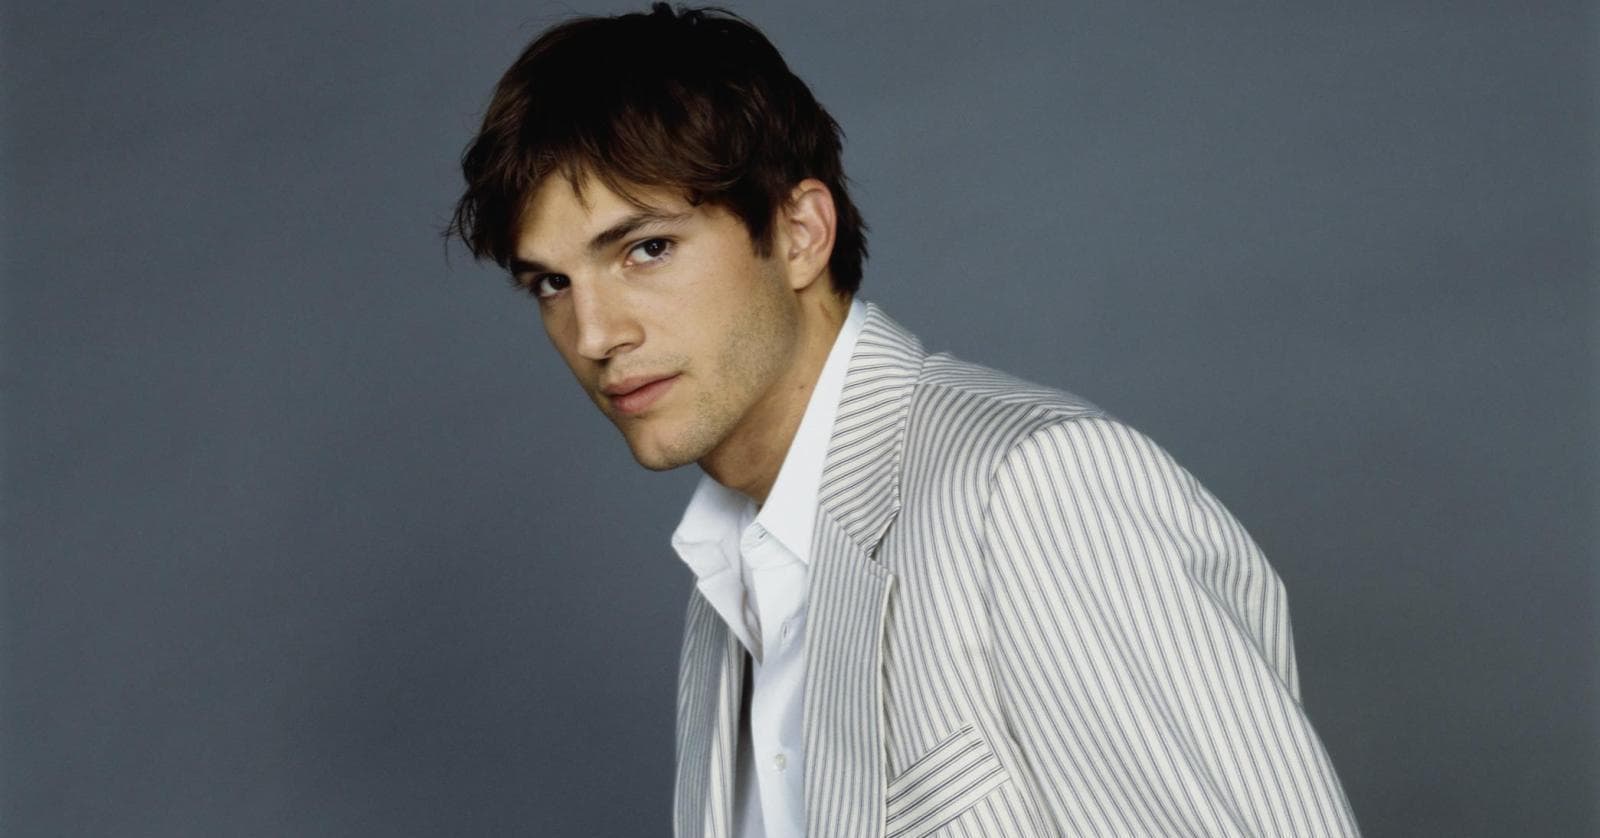 Shirtless Ashton Kutcher | Hot Pics, Photos and Images